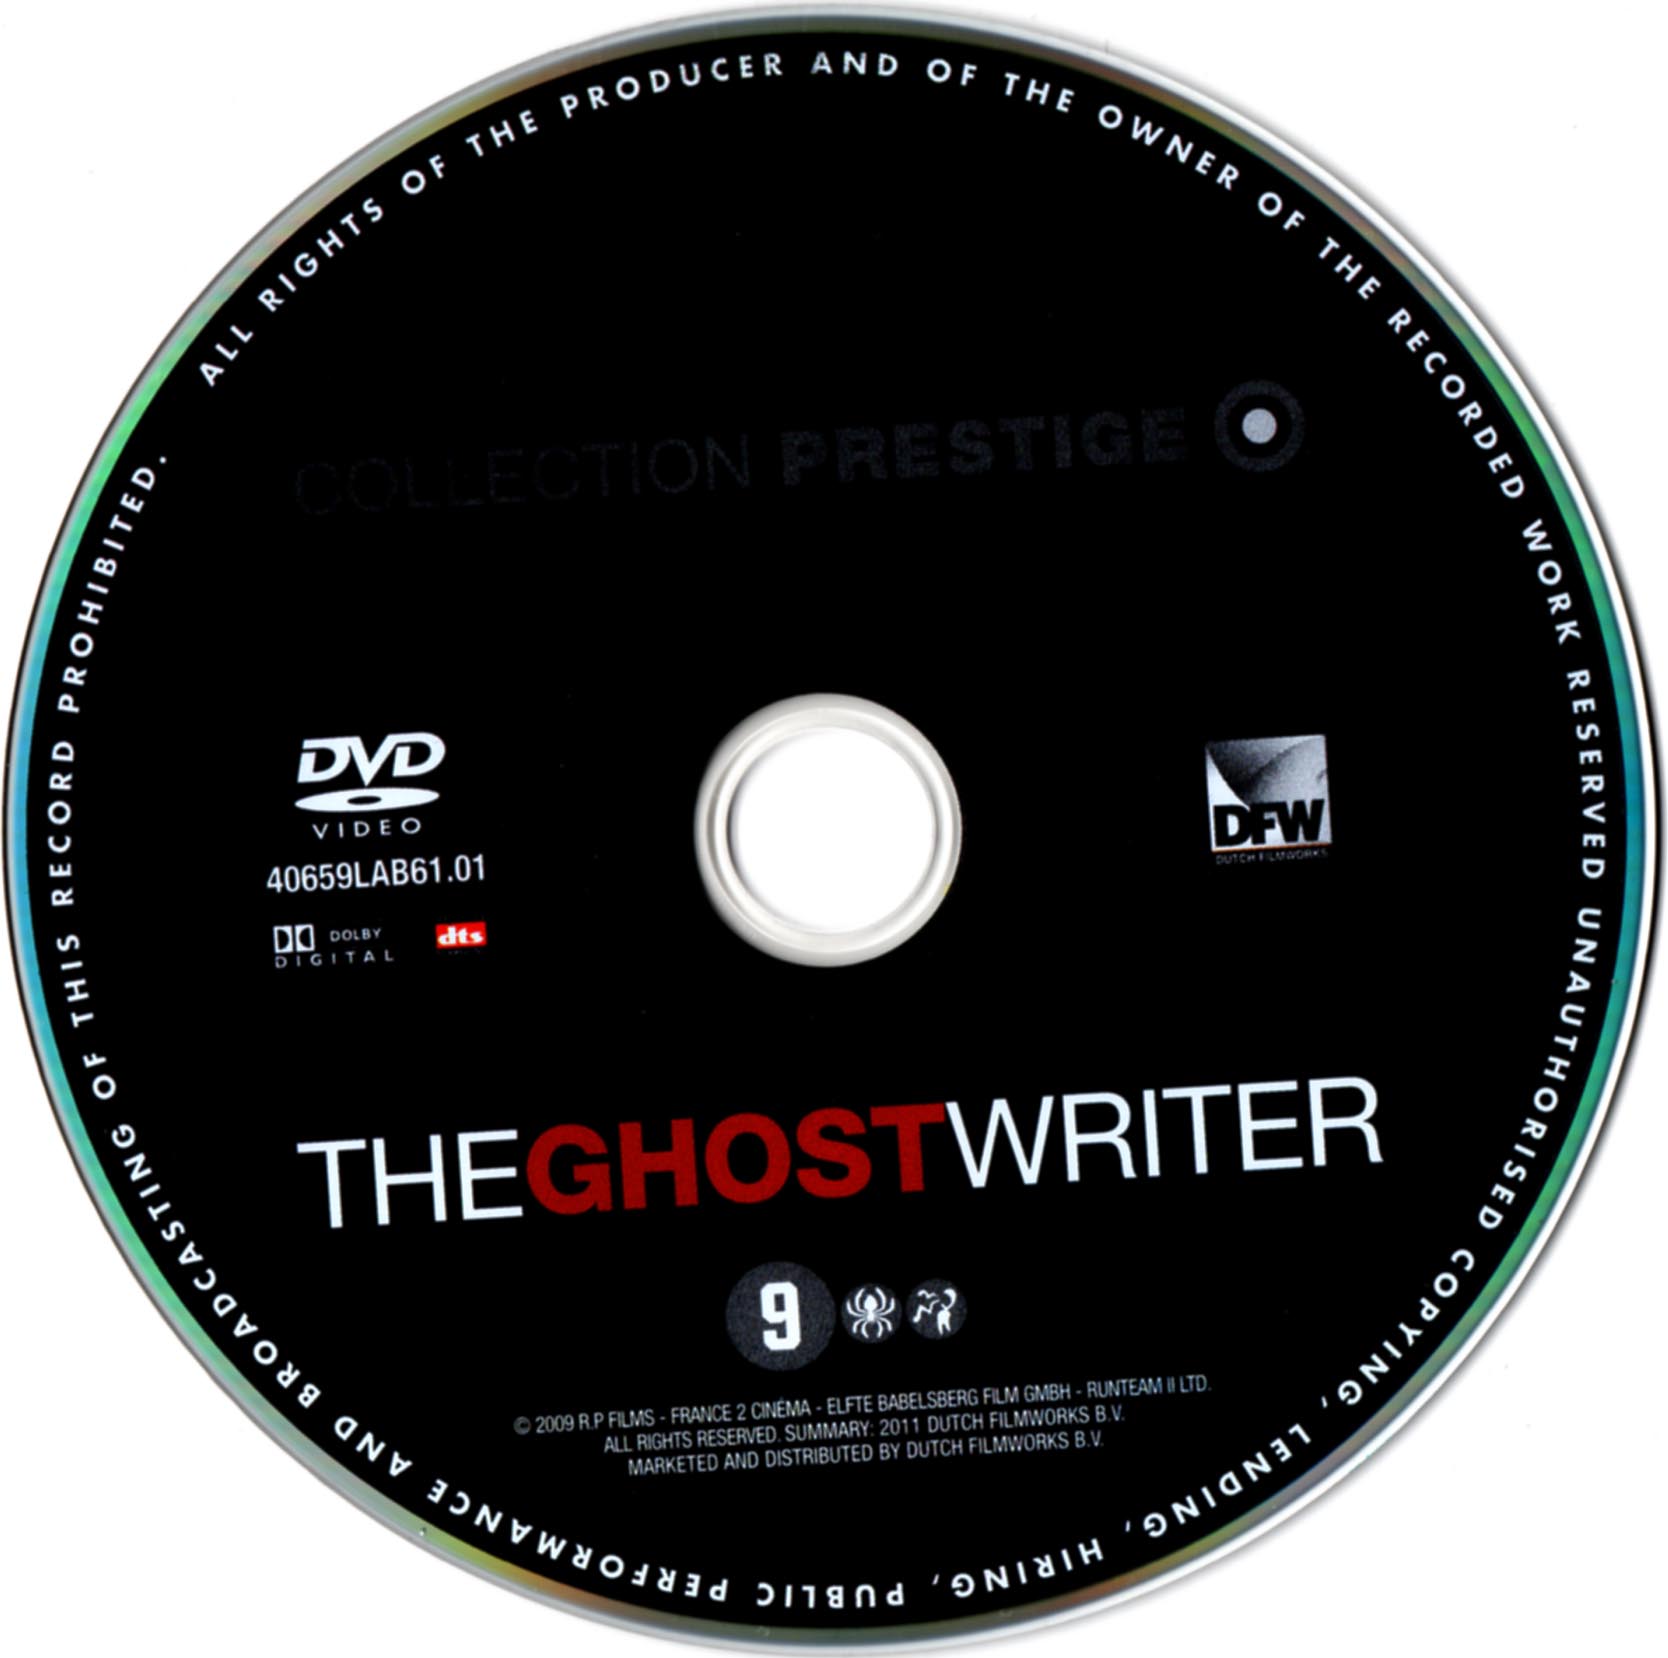 The ghost writer v2